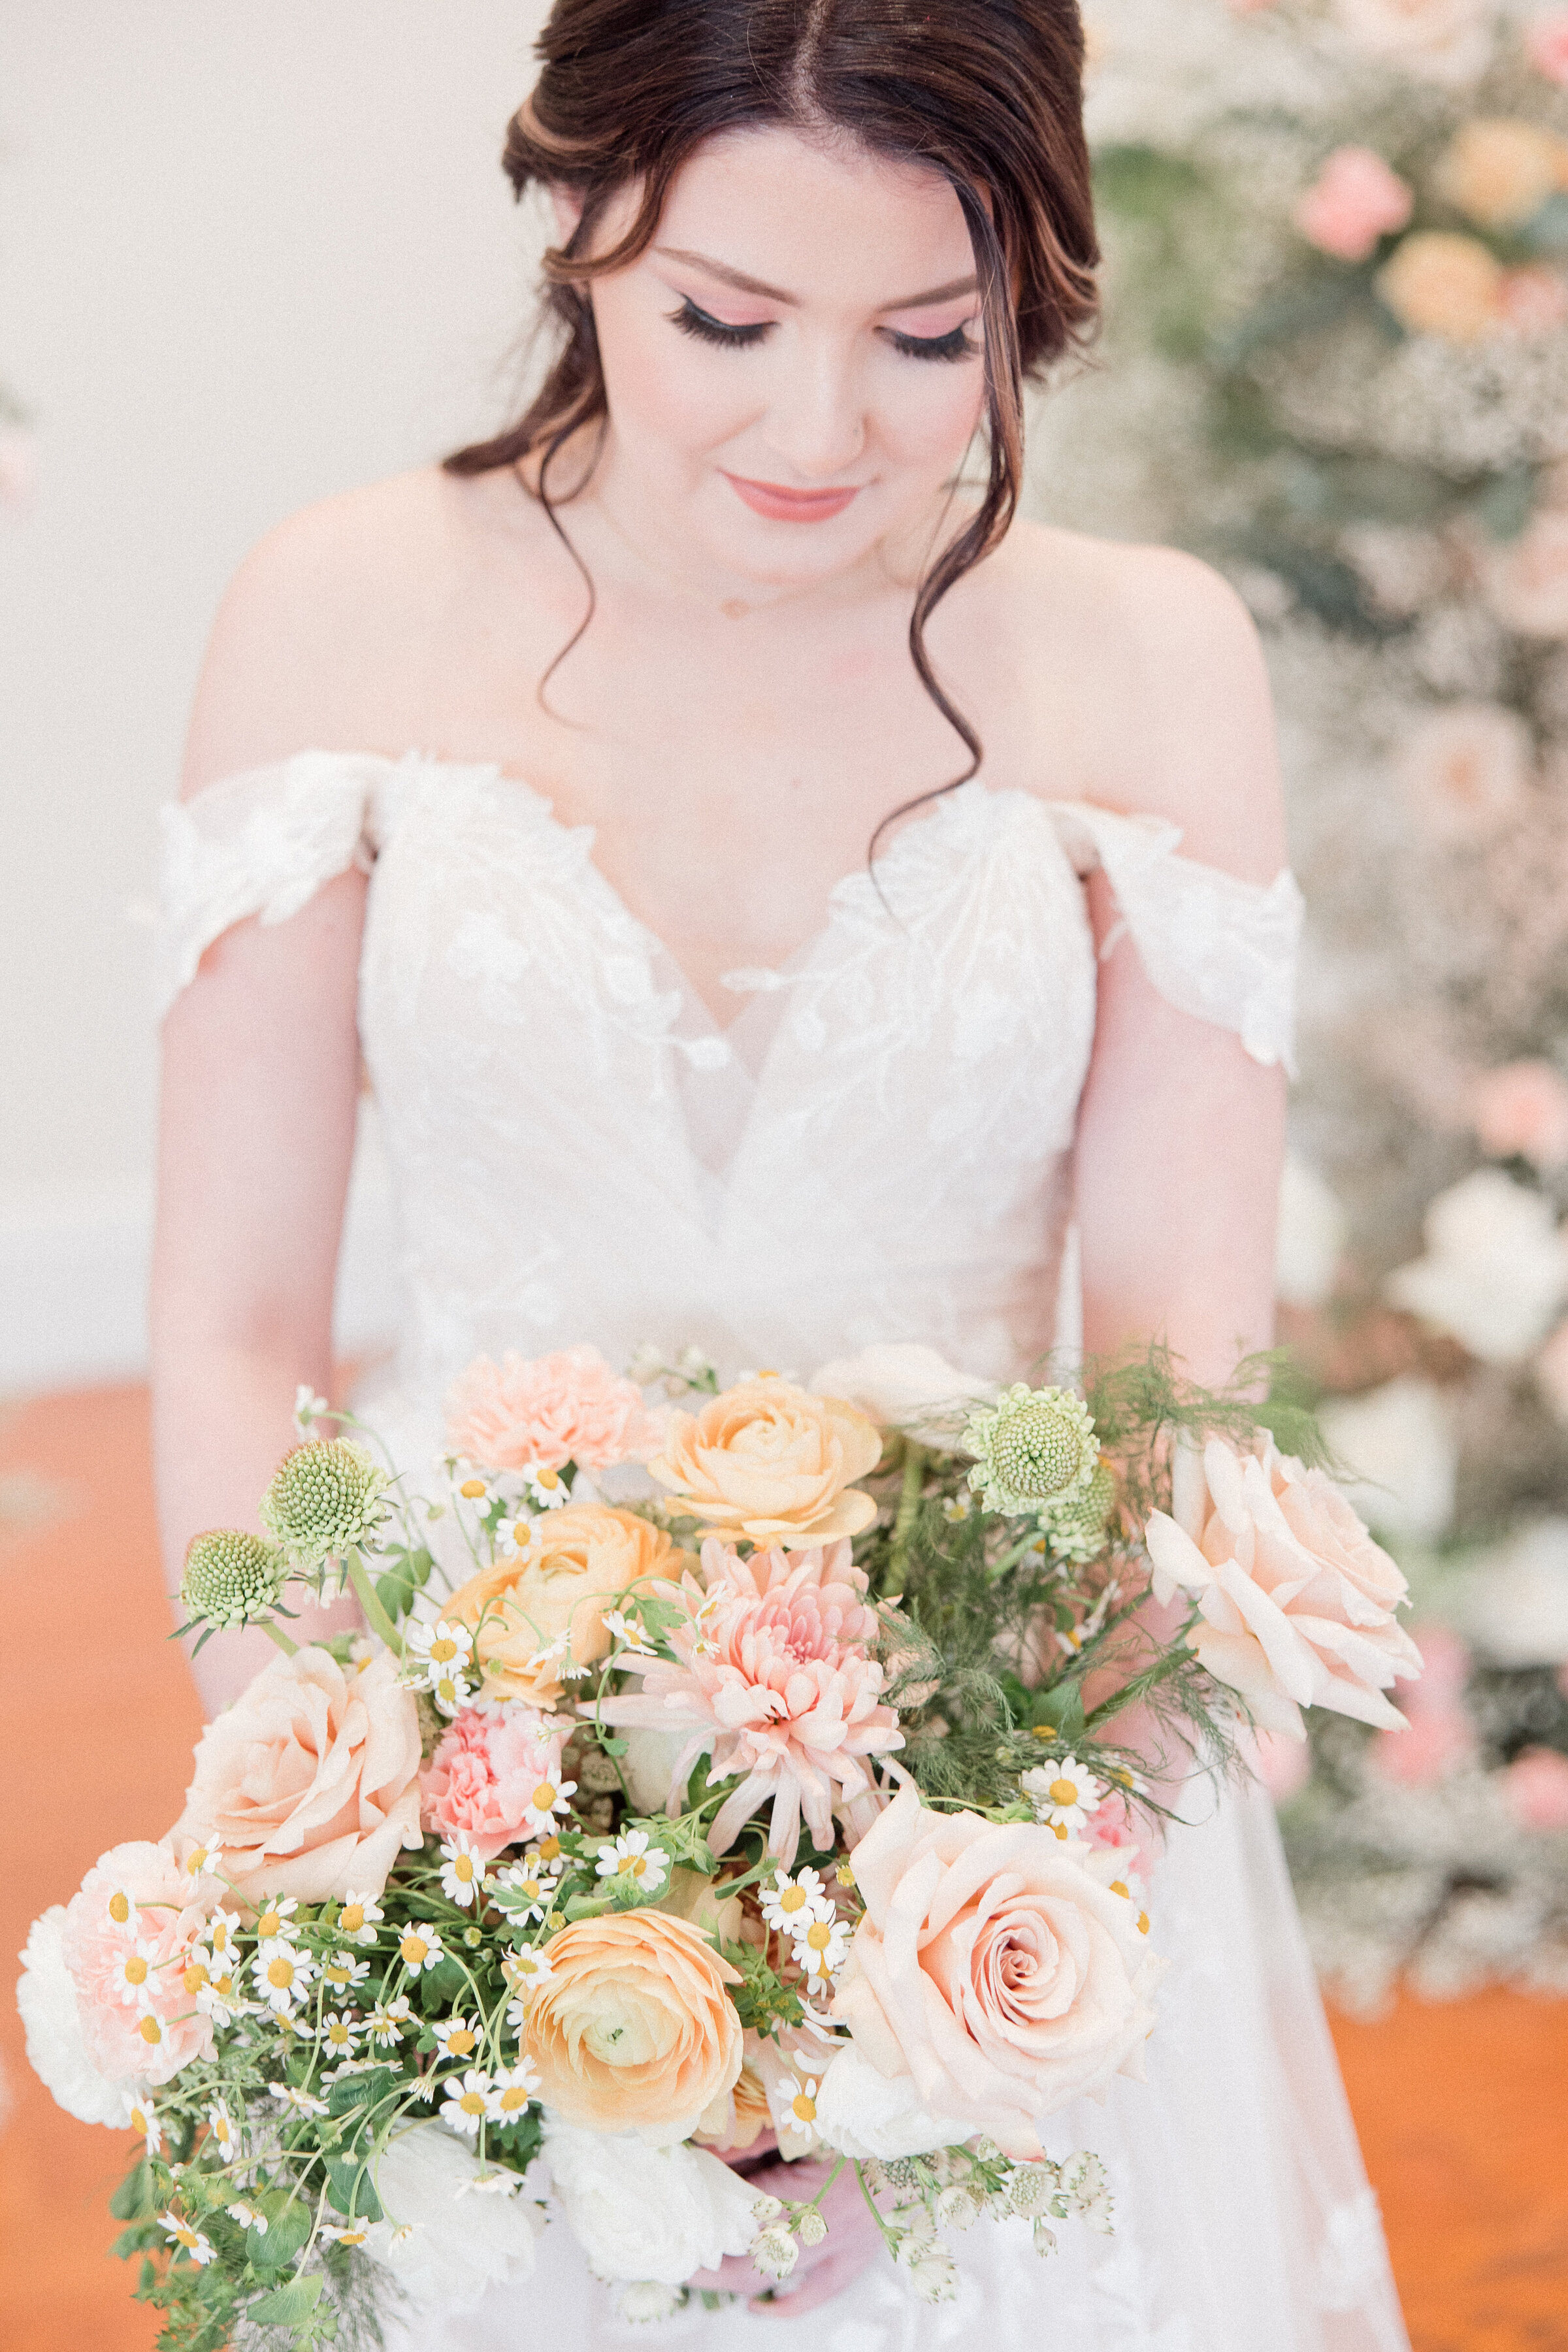 bride smiling down at bouquet